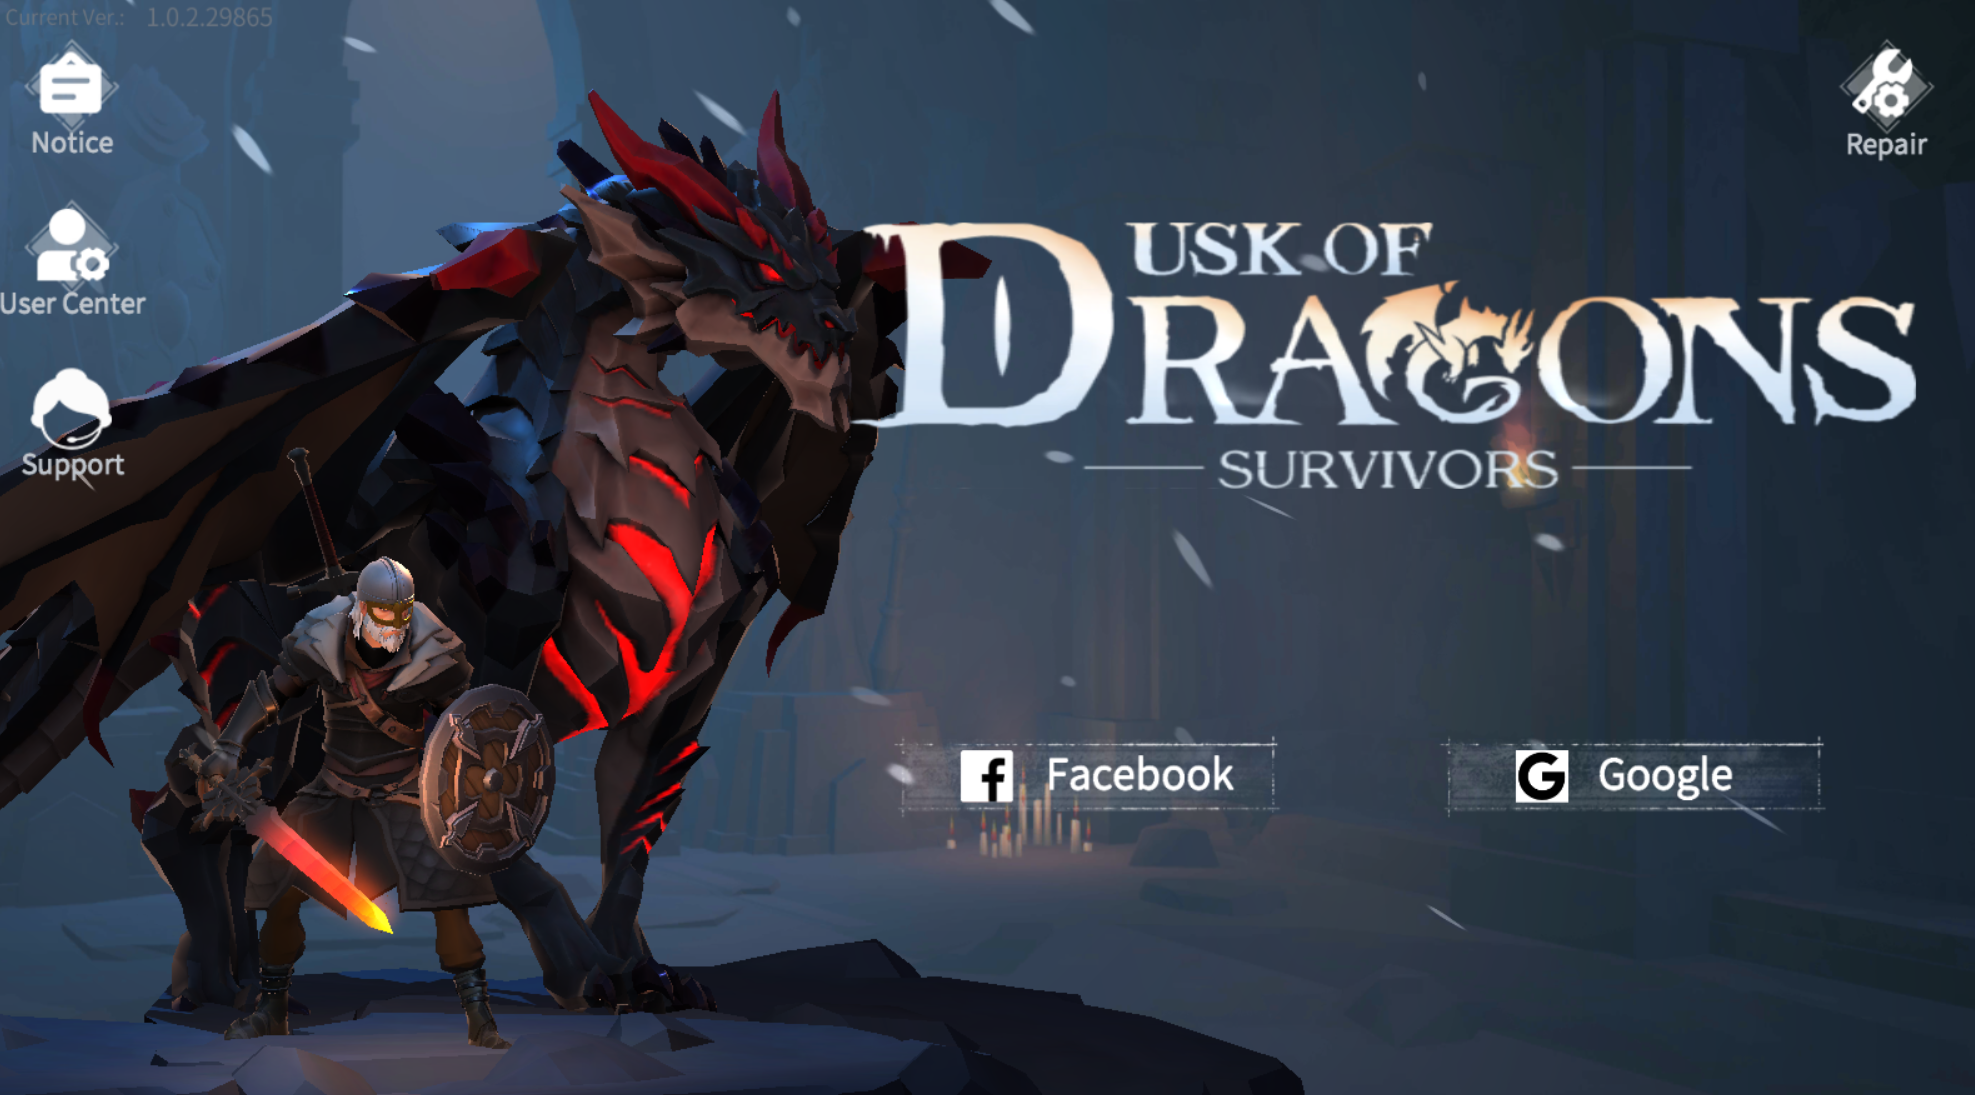 Dusk of Dragons: Survivors será lançado em setembro - Adrenaline